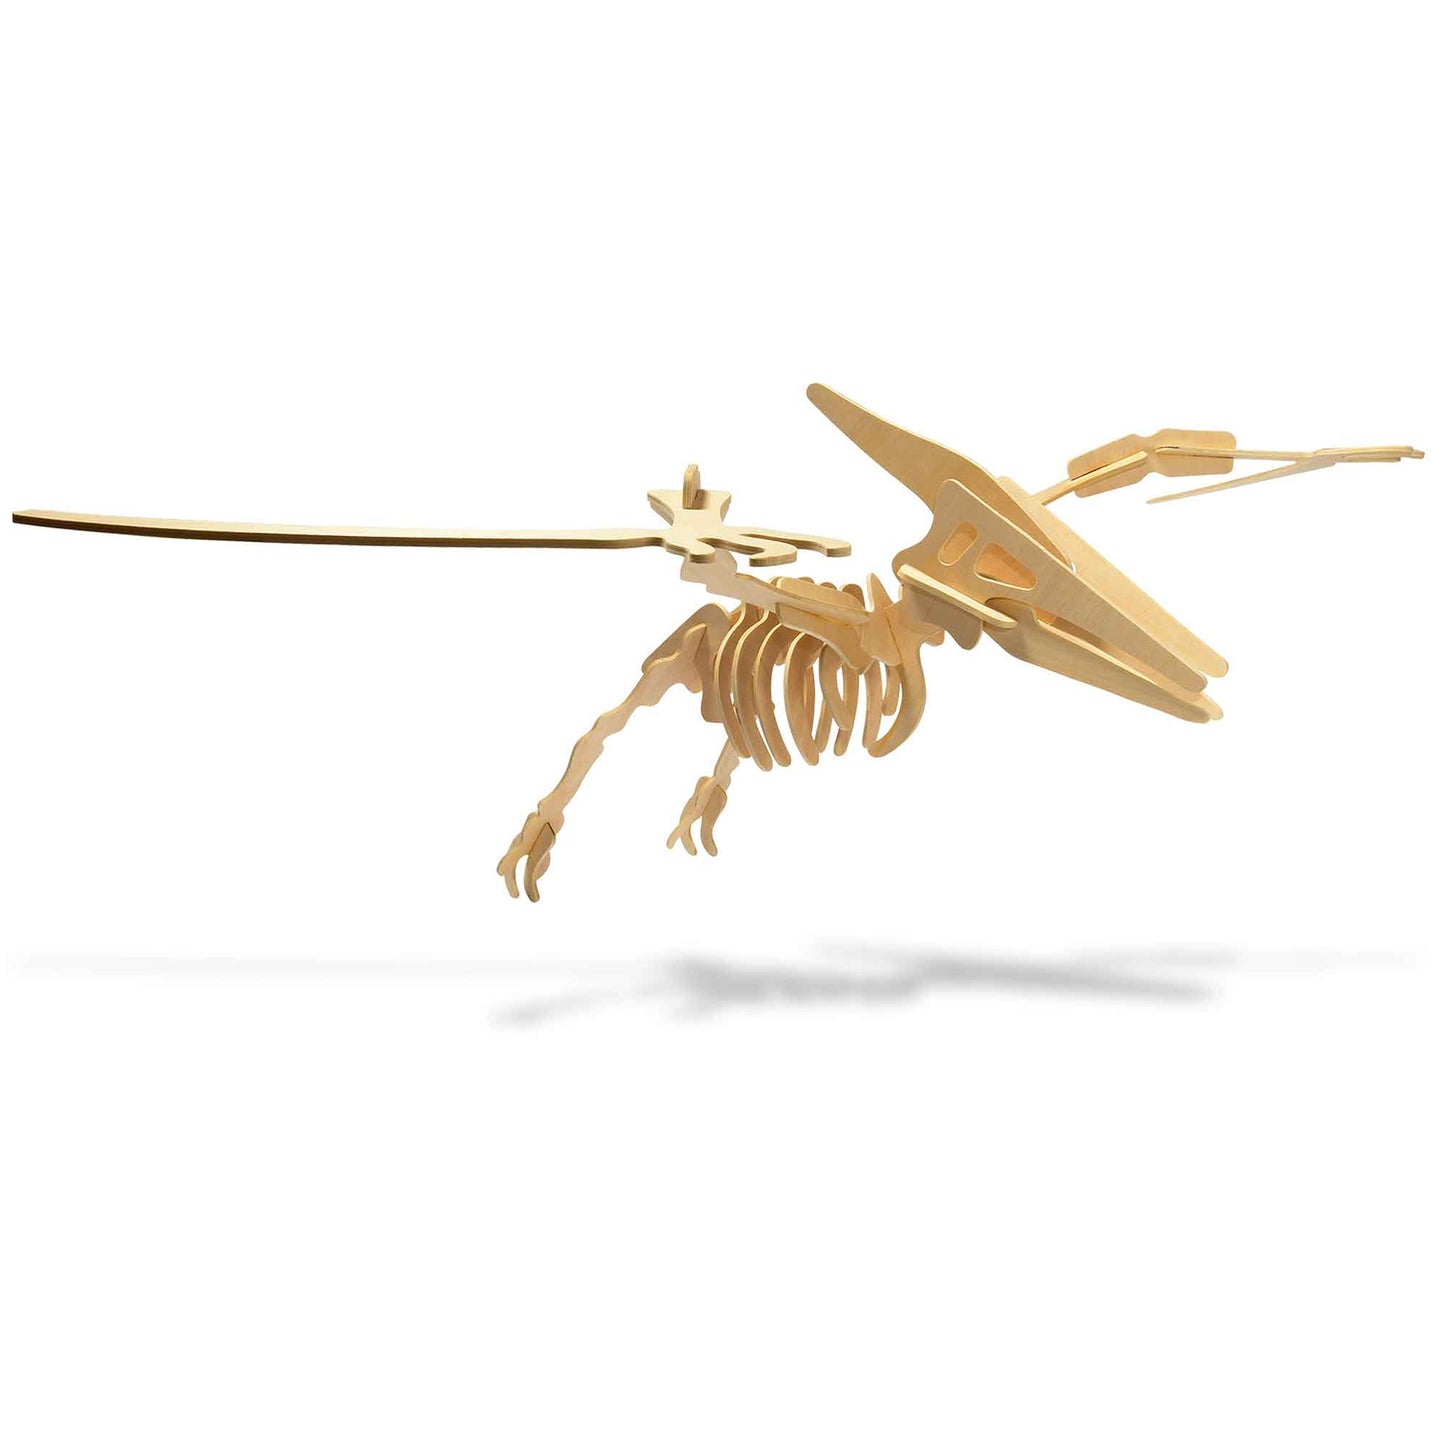 Pteranodon 3D Wood Modeling Kit